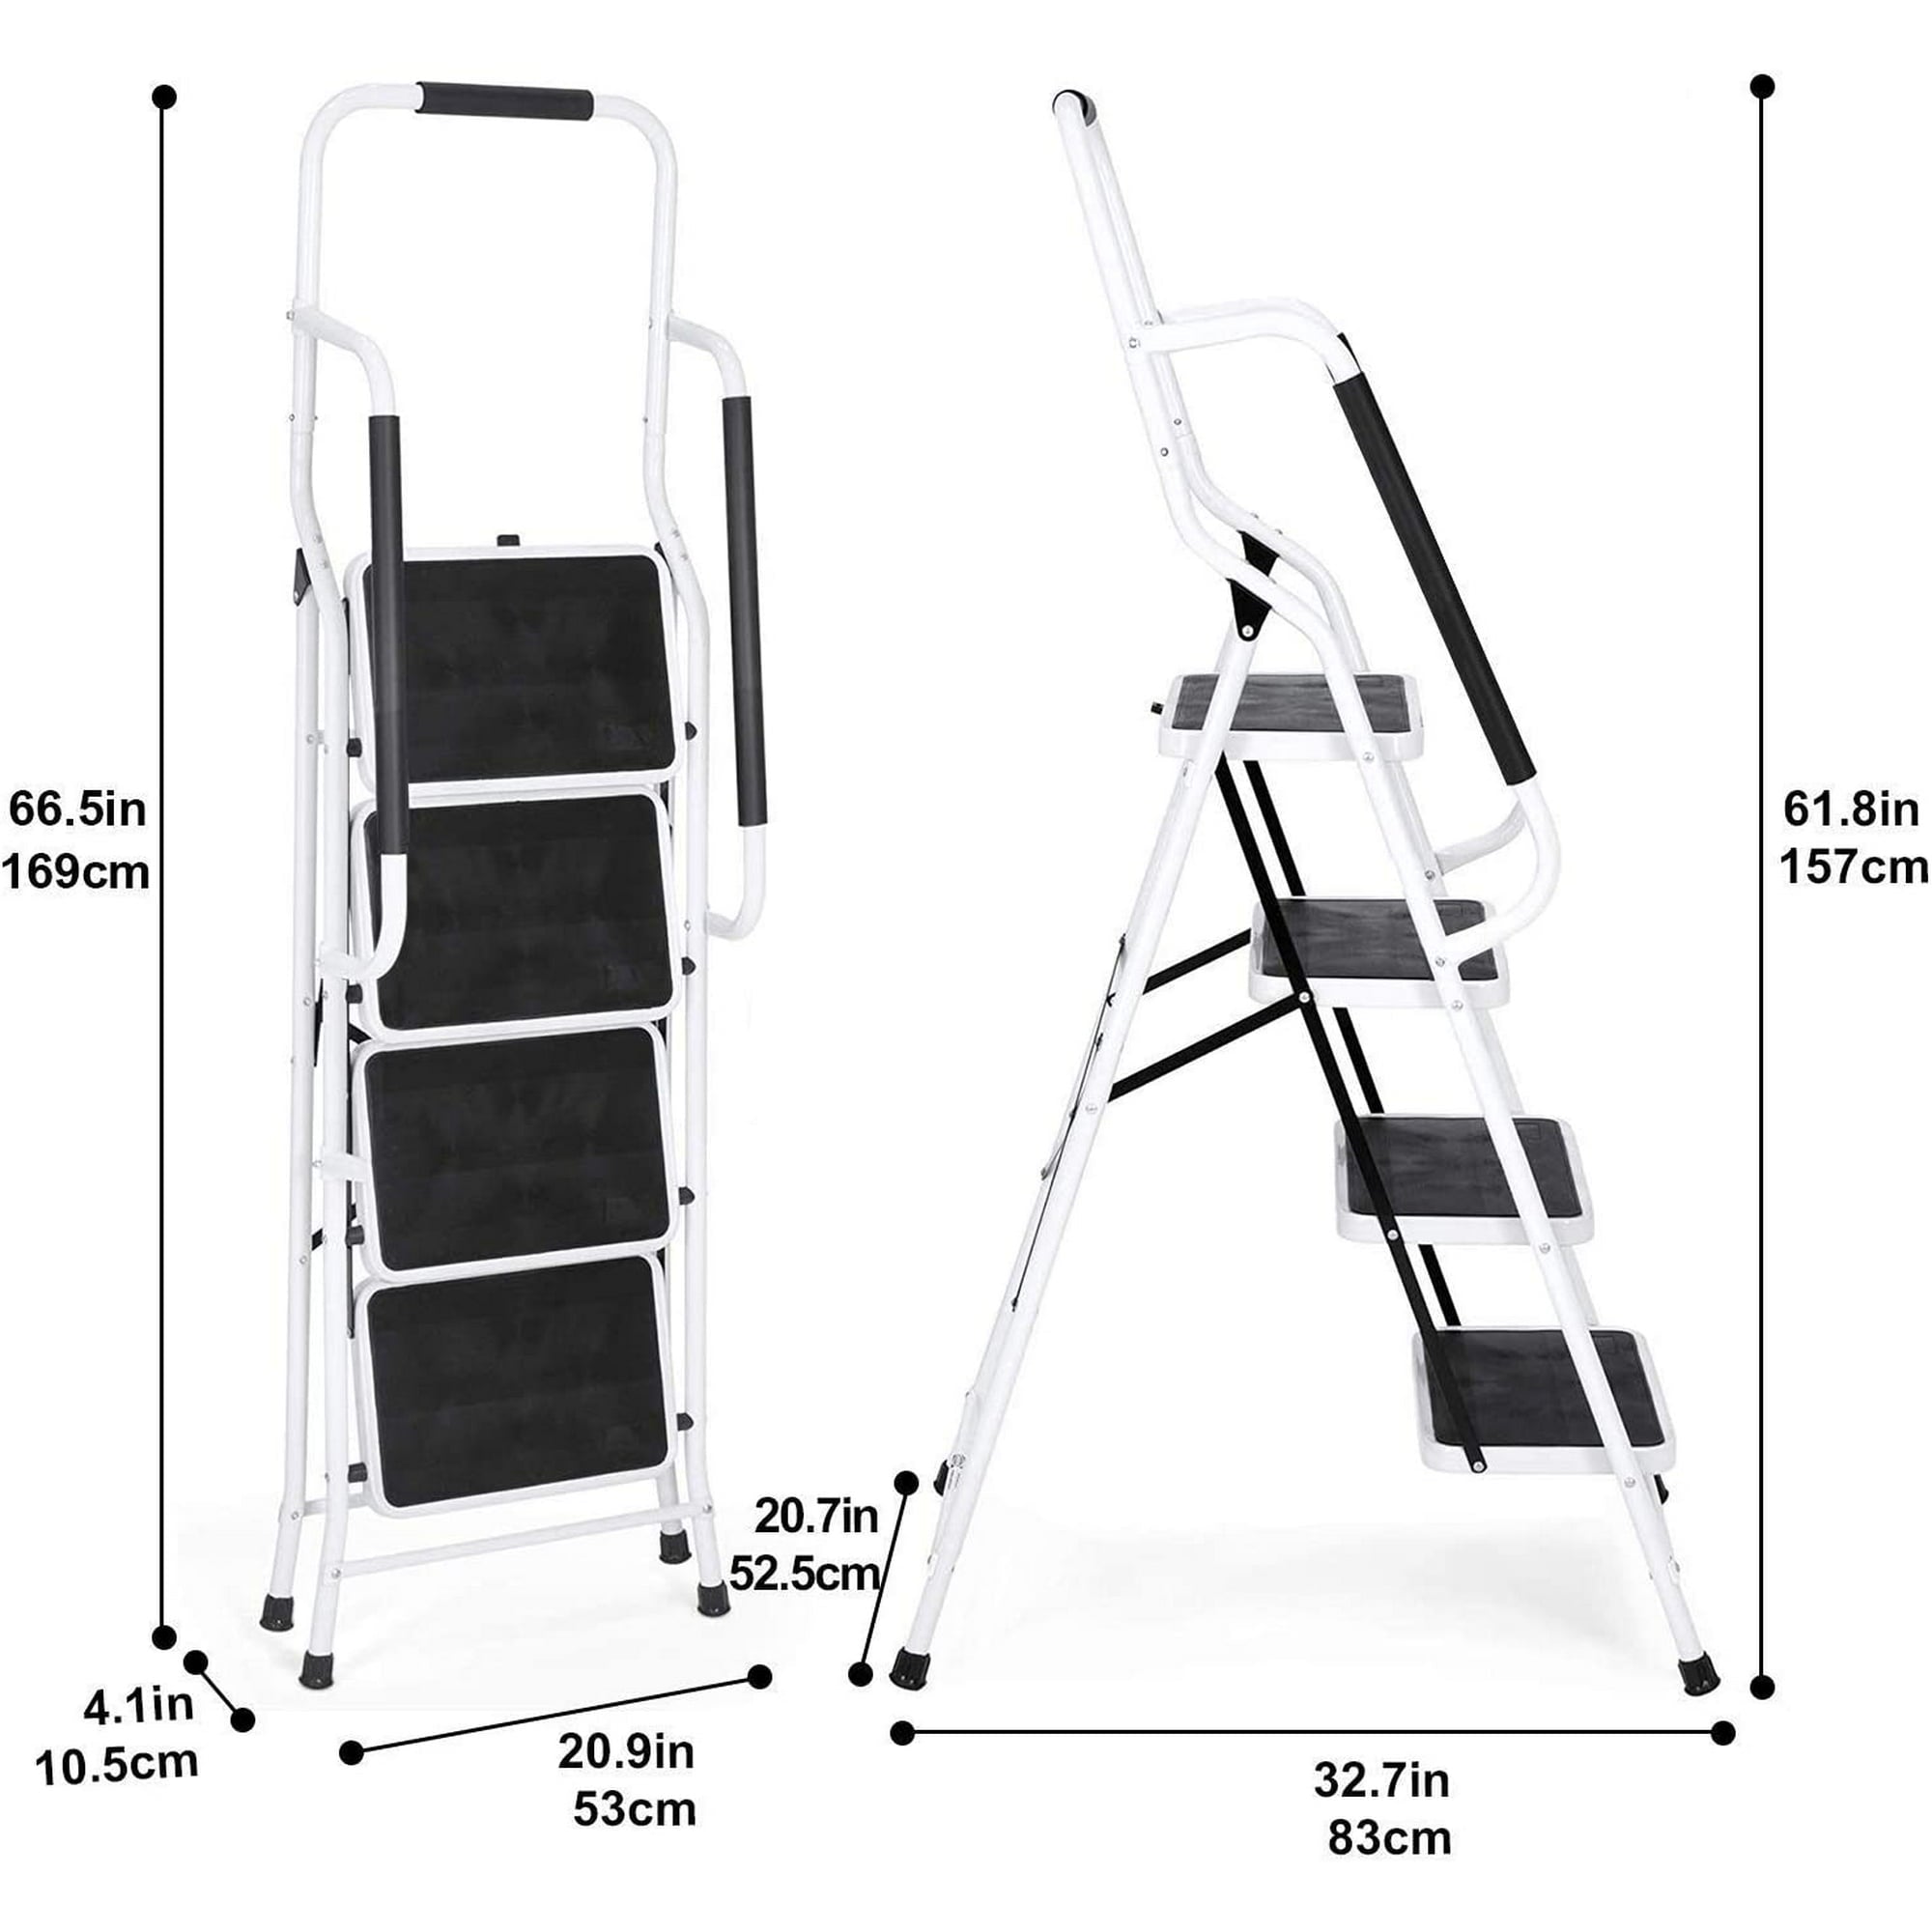 SUGIFT 4 Step Ladder Folding Step Stool with Anti-Slip Pedal Platform